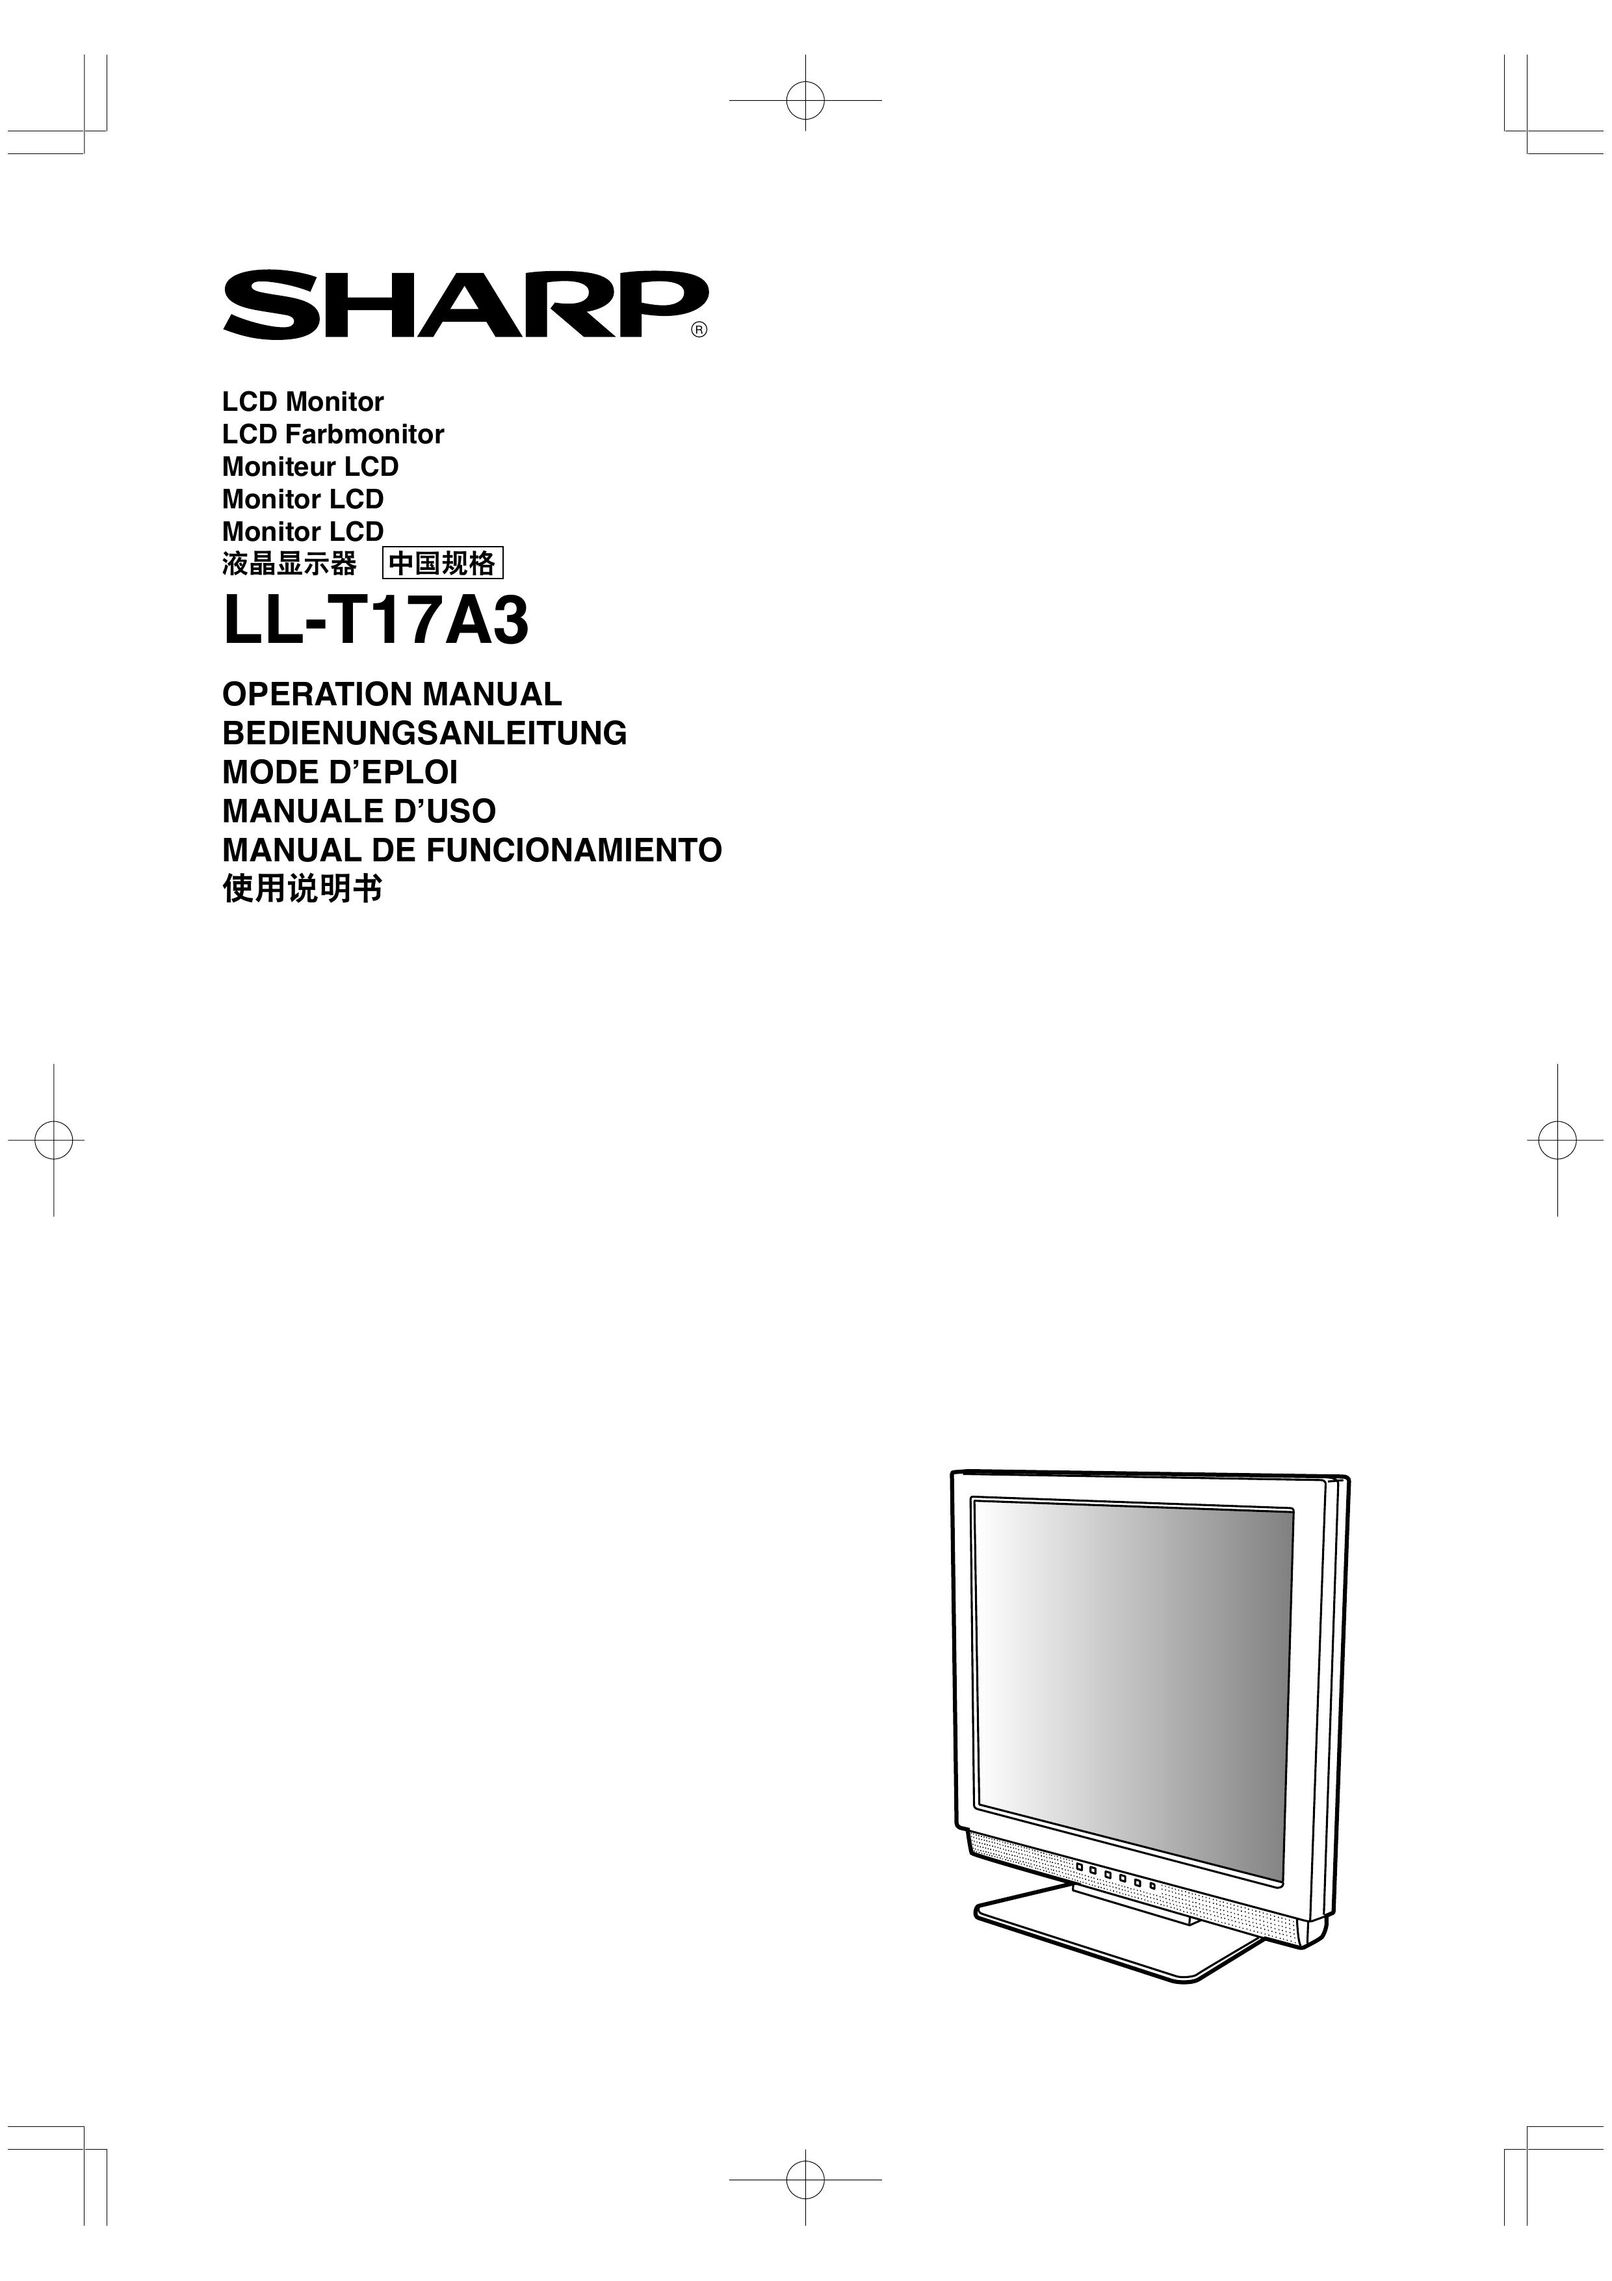 Sharp LL-T17A3 Computer Monitor User Manual